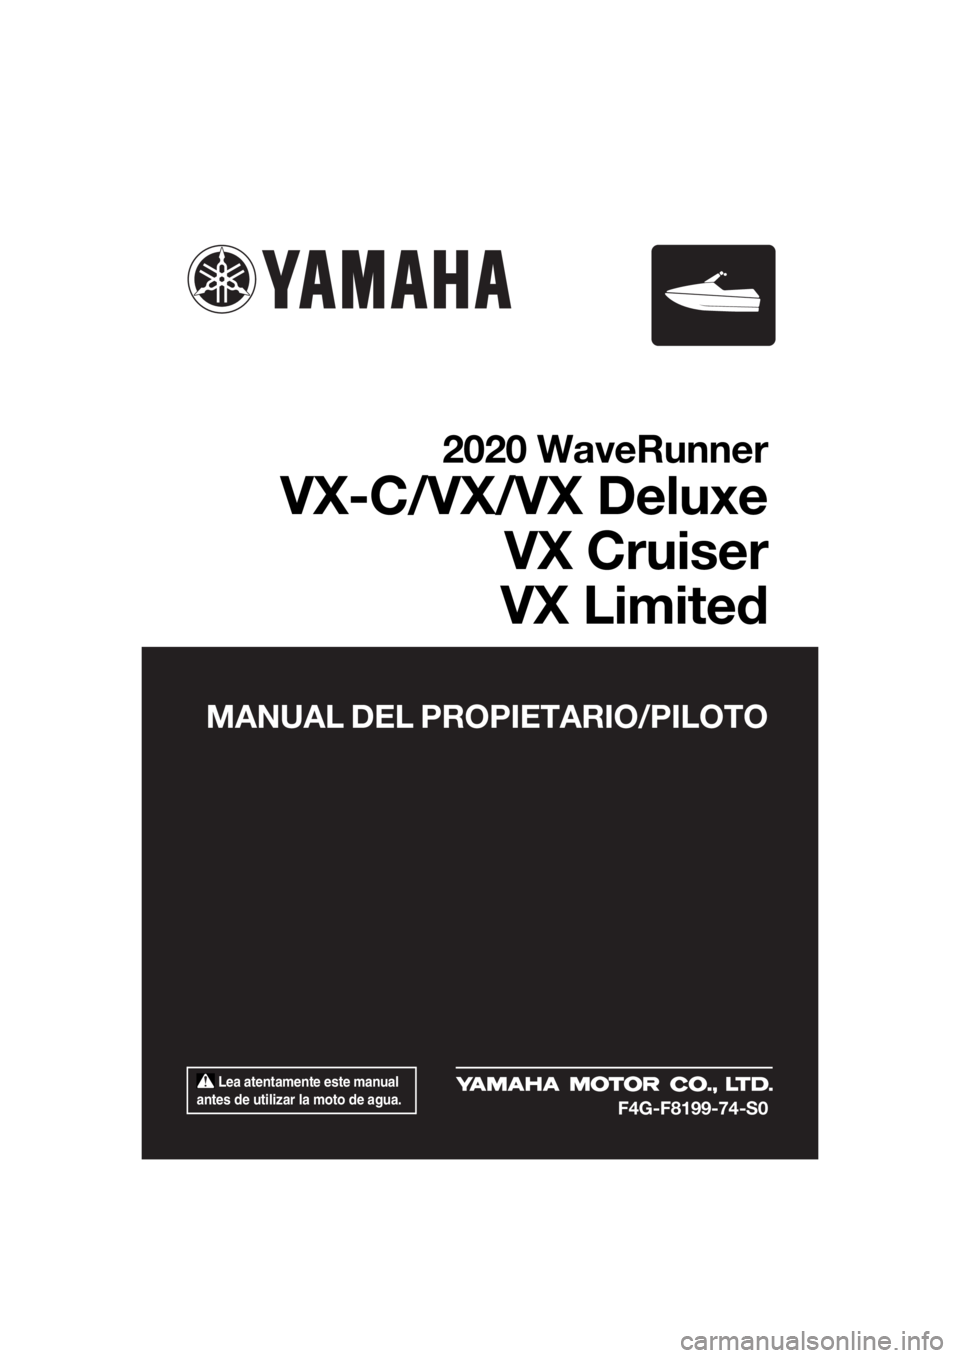 YAMAHA VX 2020  Manuale de Empleo (in Spanish) 